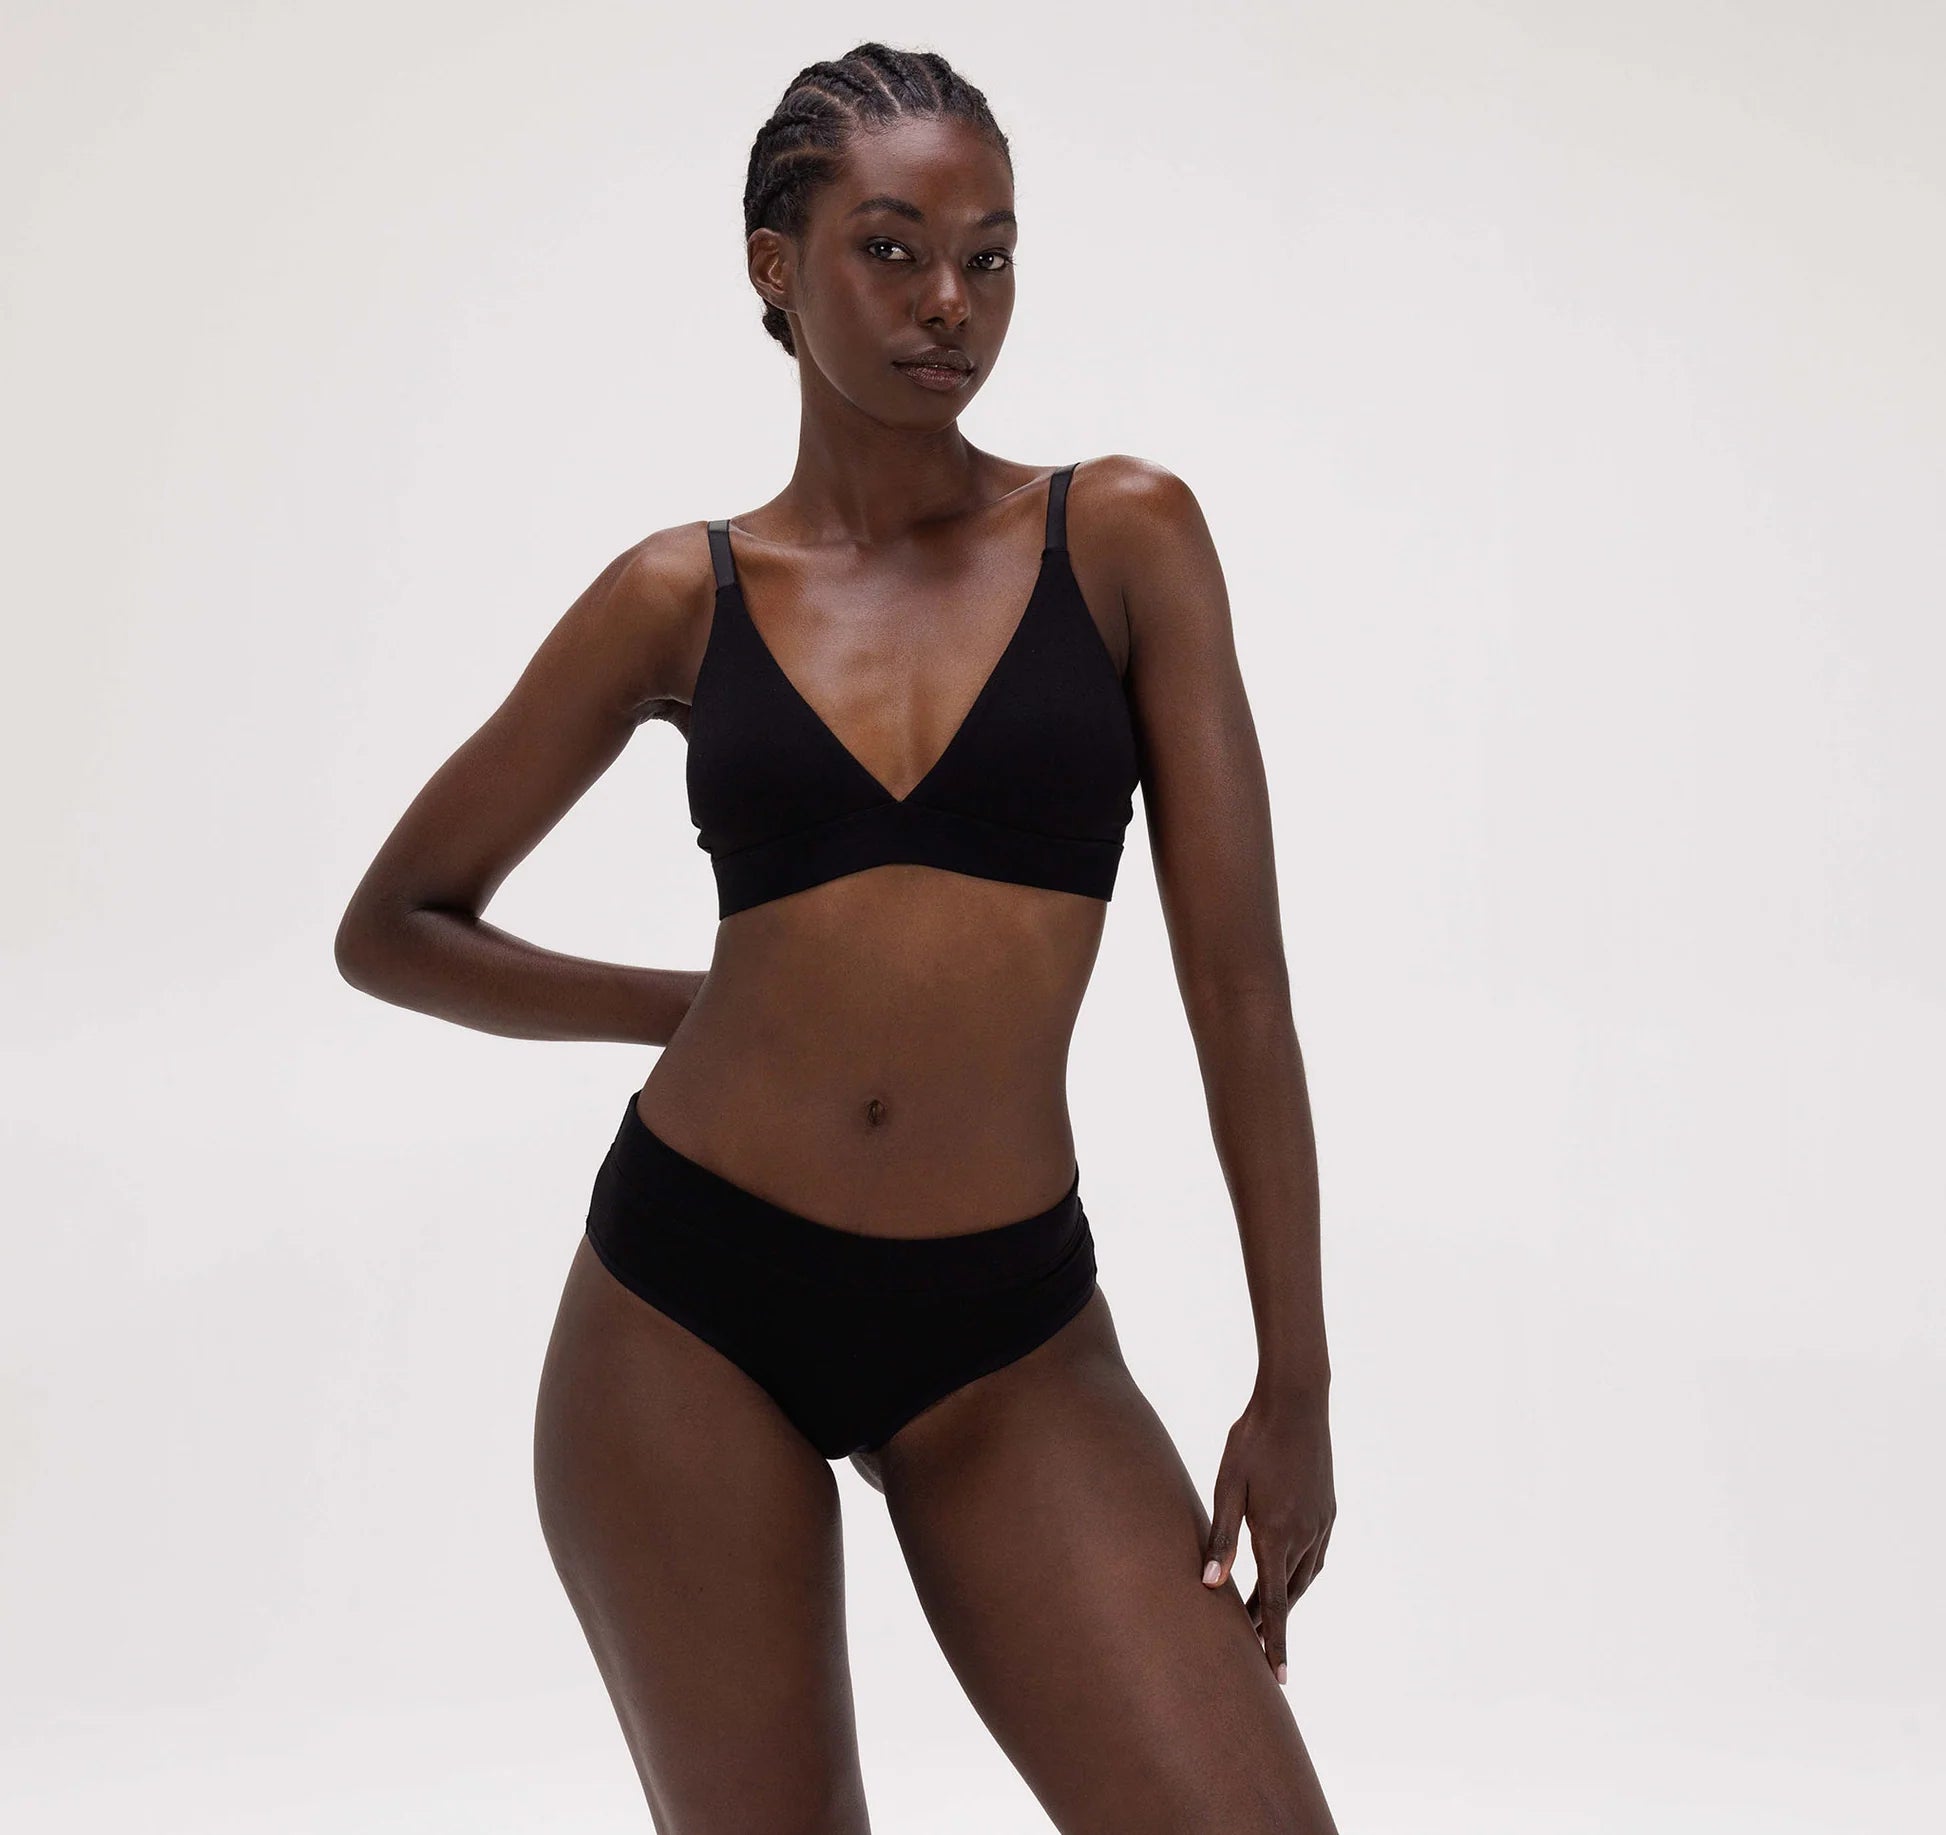 An Organic Basics Core Triangle Bra - Black providing support for a woman in a black bikini top and bottom.